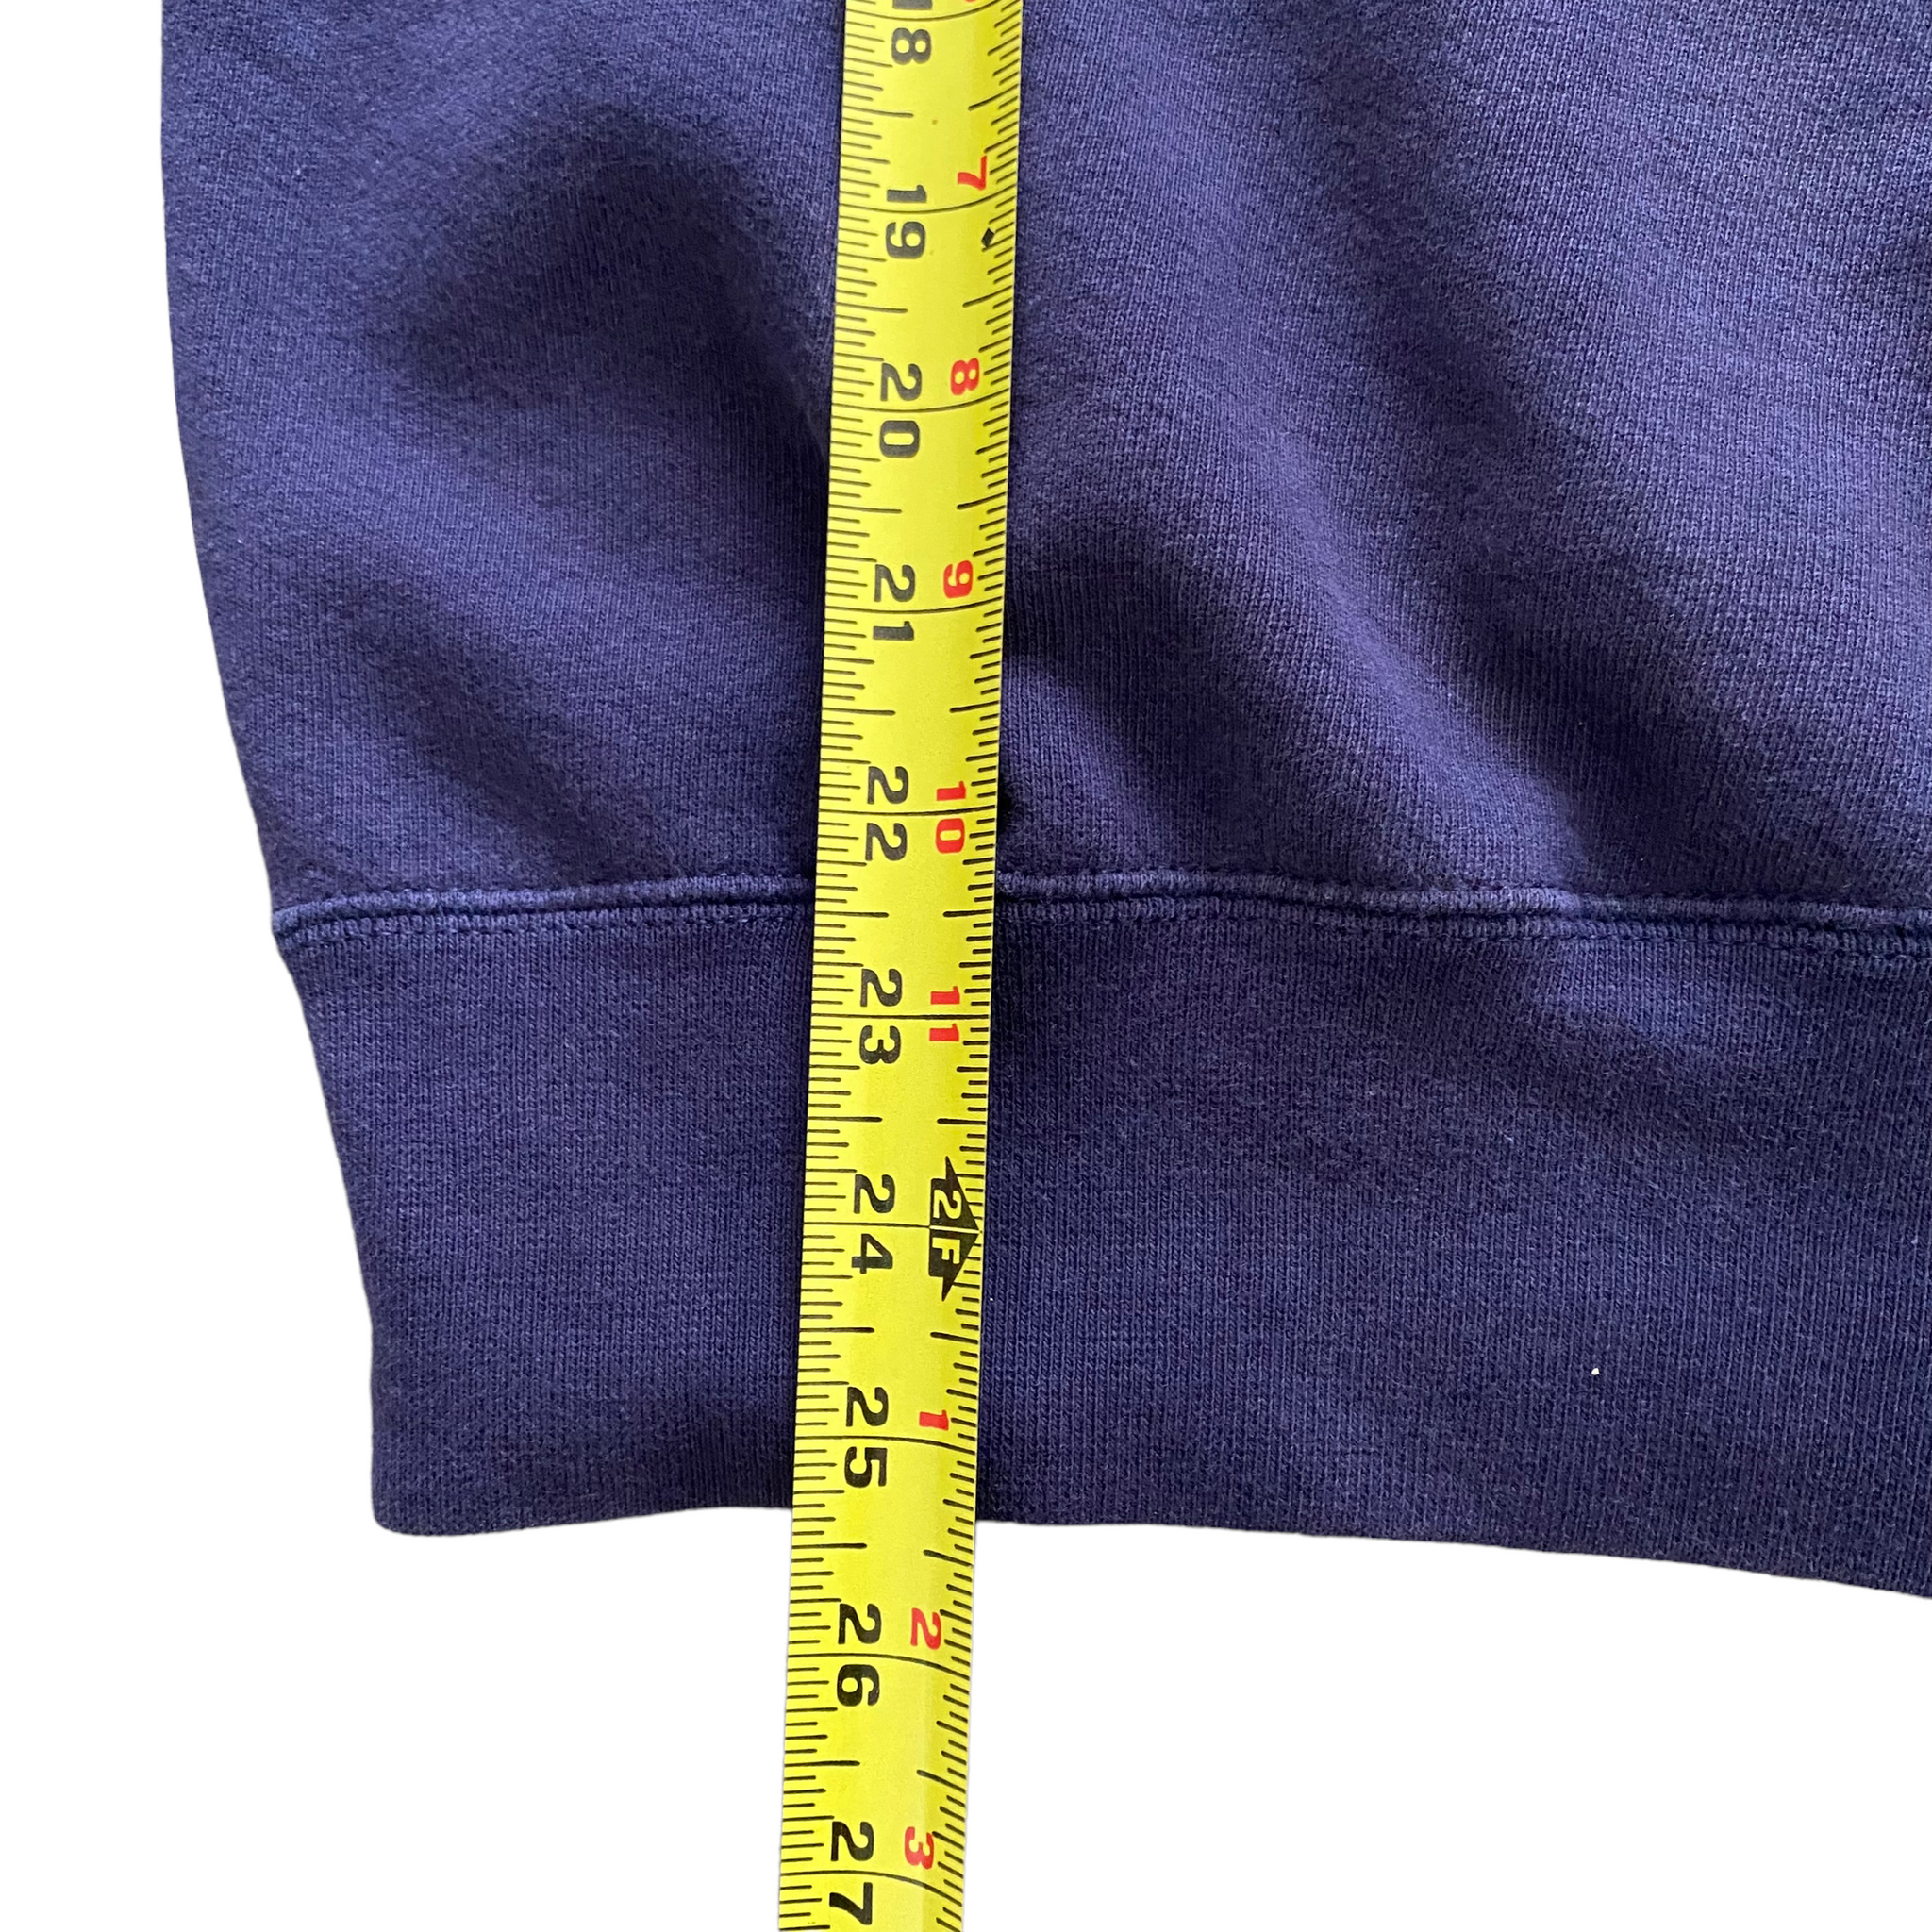 90s LL Bean russell sweatshirt. Made in usa🇺🇸 Medium